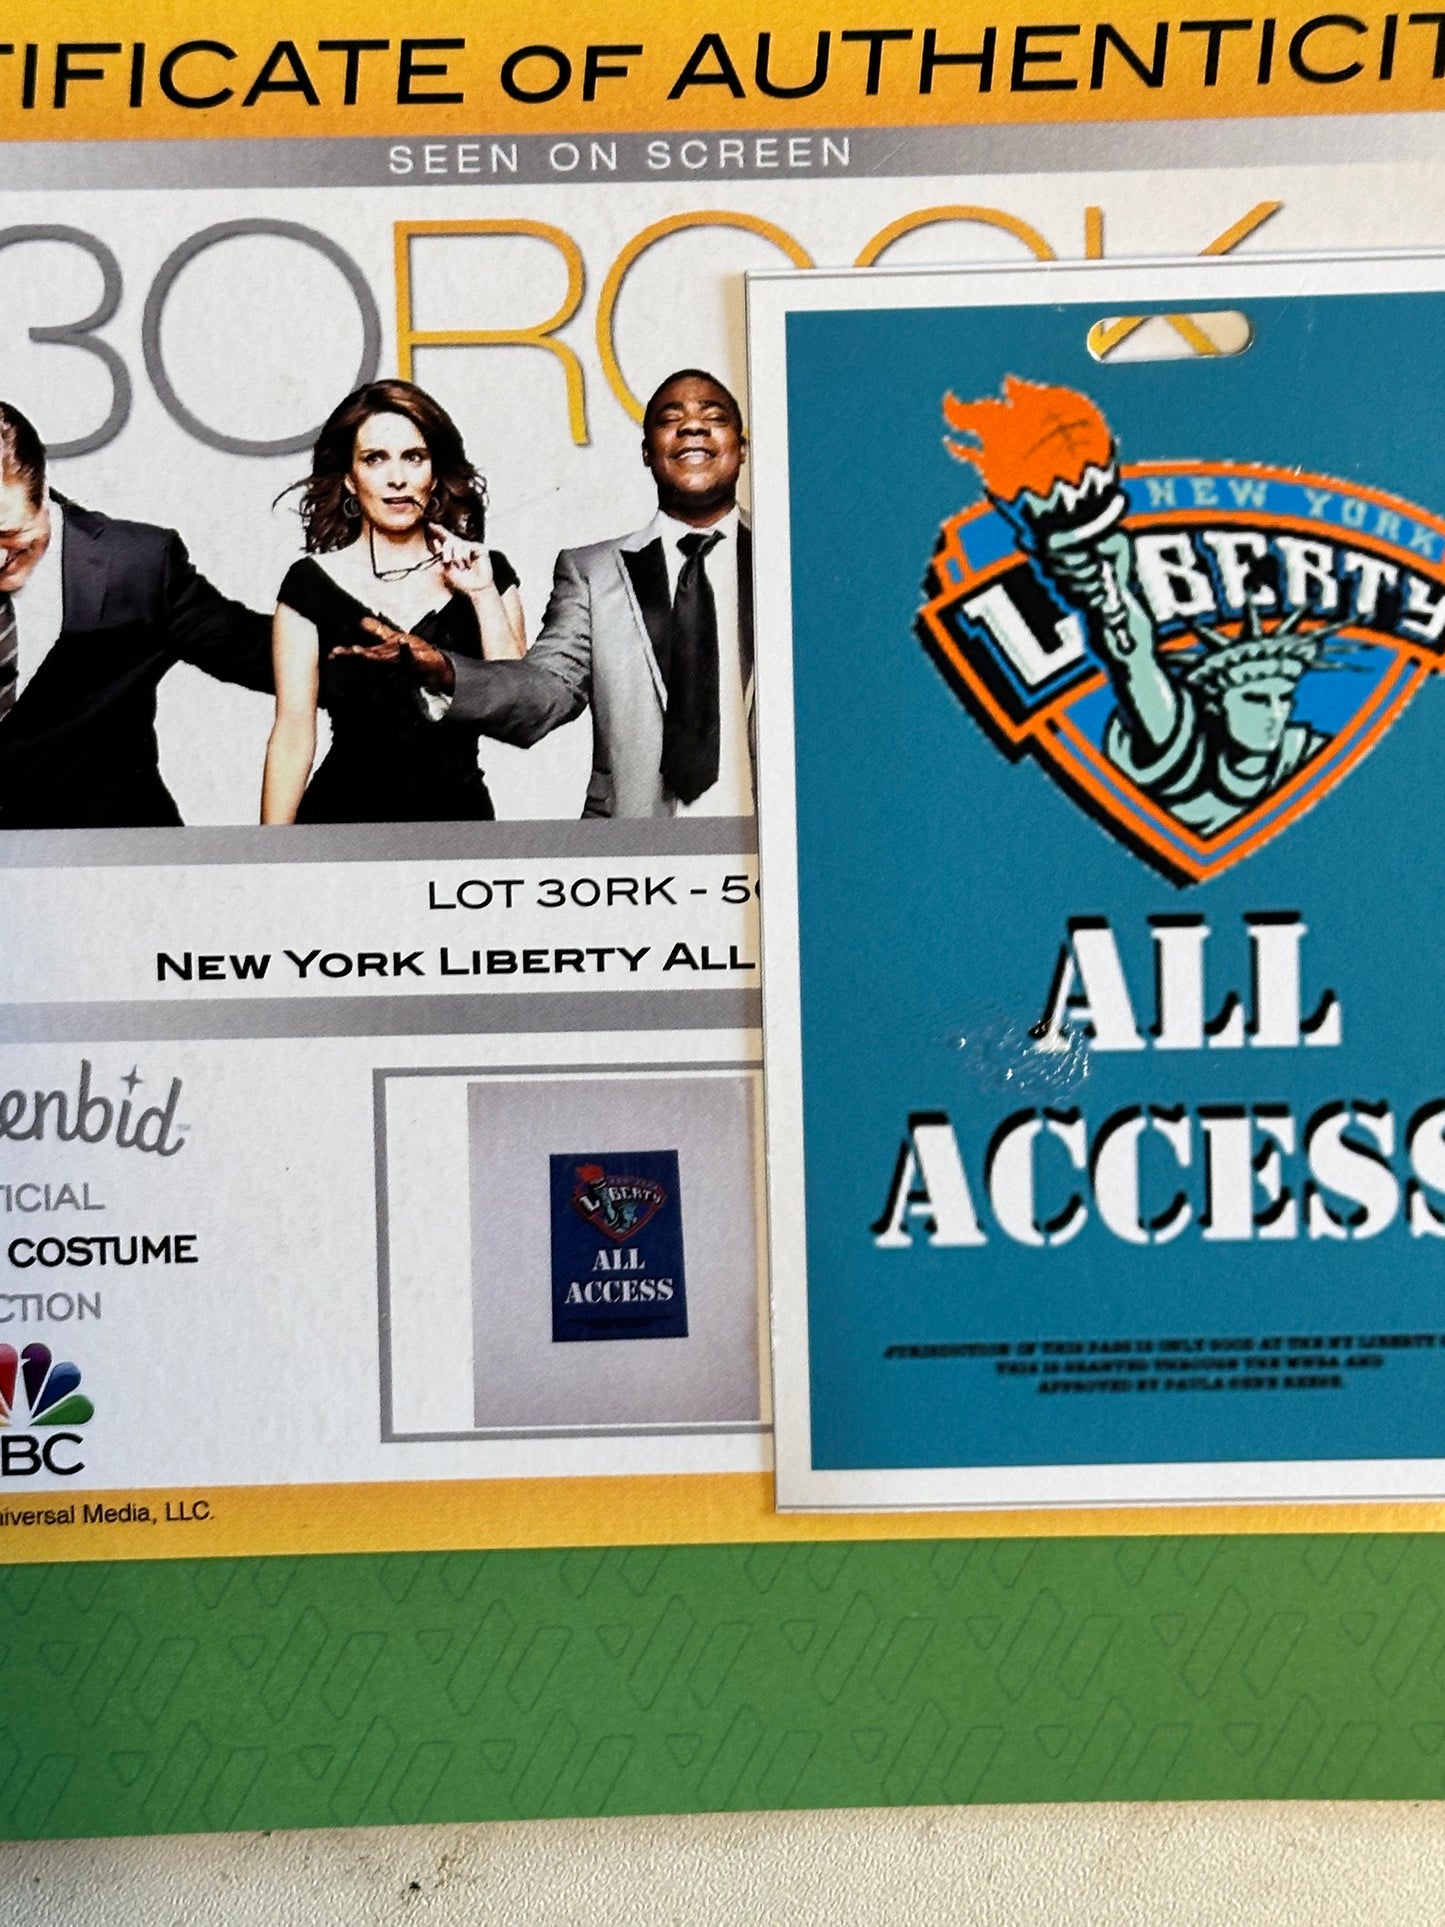 30 Rock: New York Liberty All Access Passes